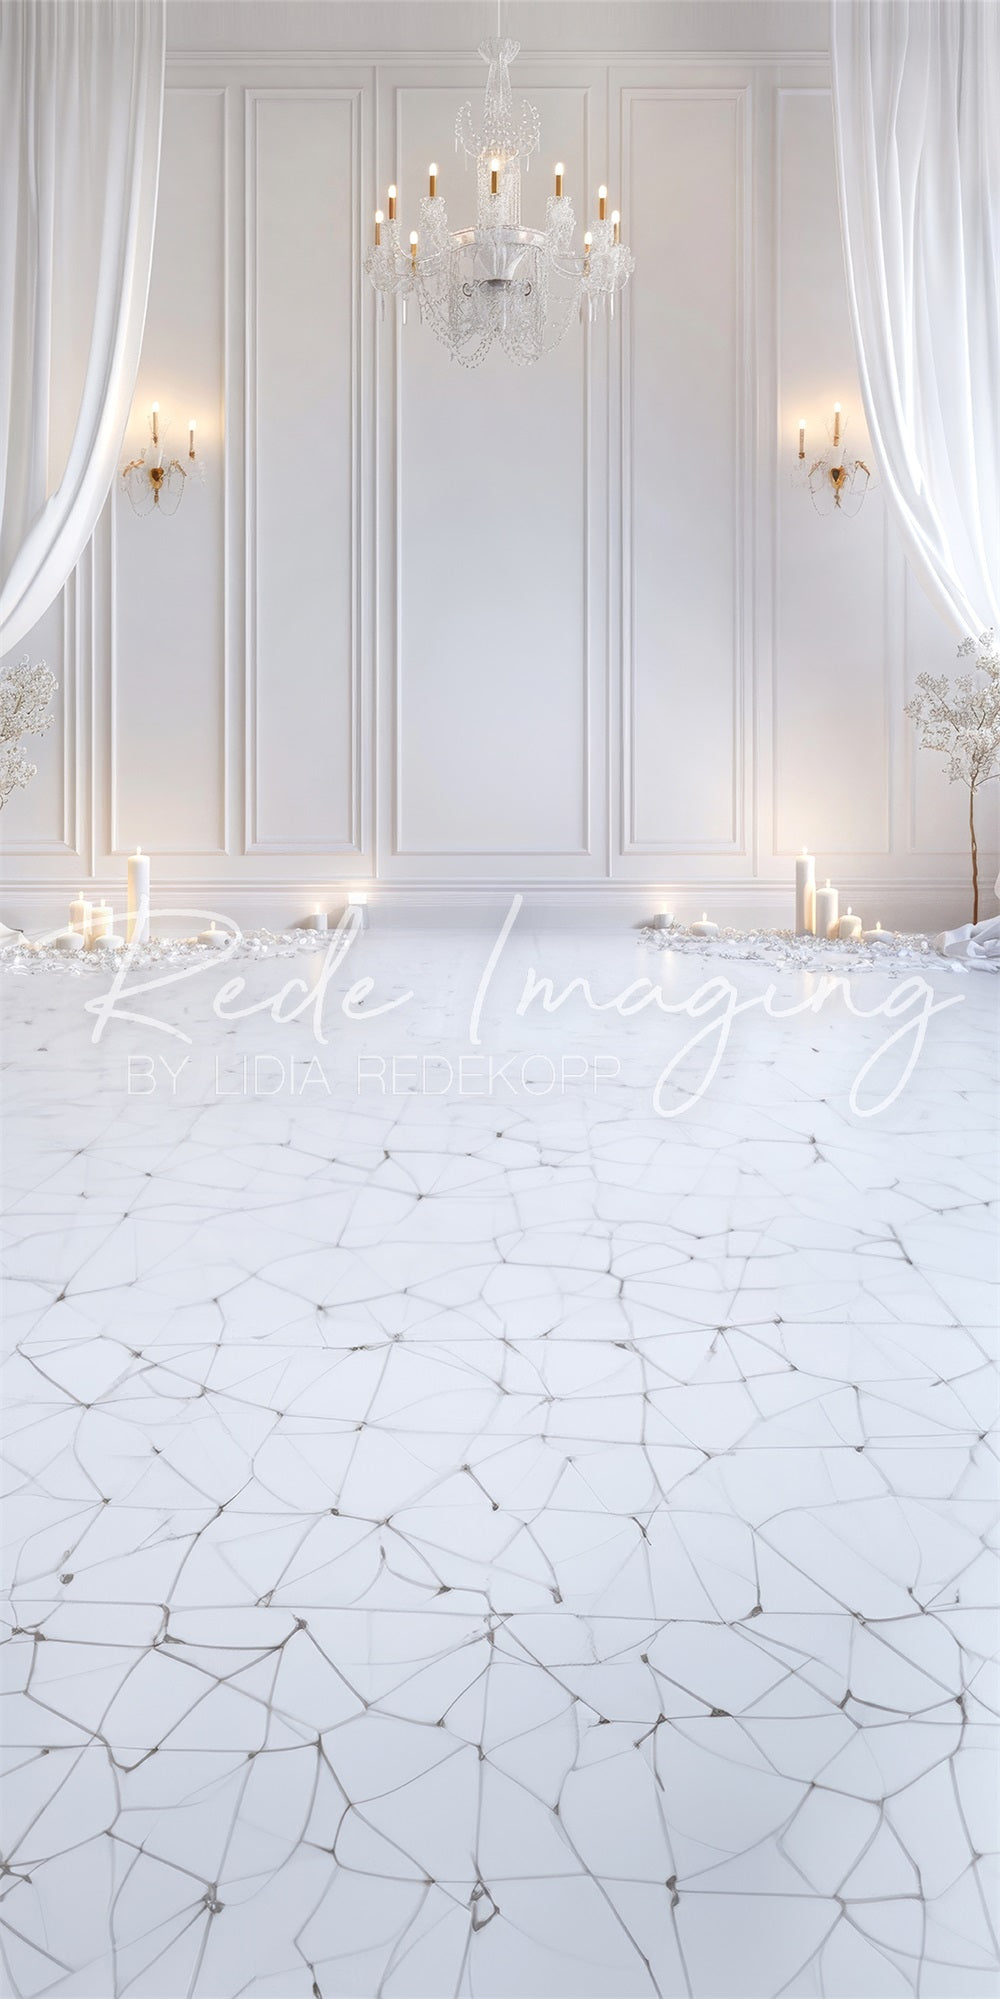 TEST SweeP Retro Elegant White Curtain and Chandelier Backdrop Ontworpen door Lidia Redekopp